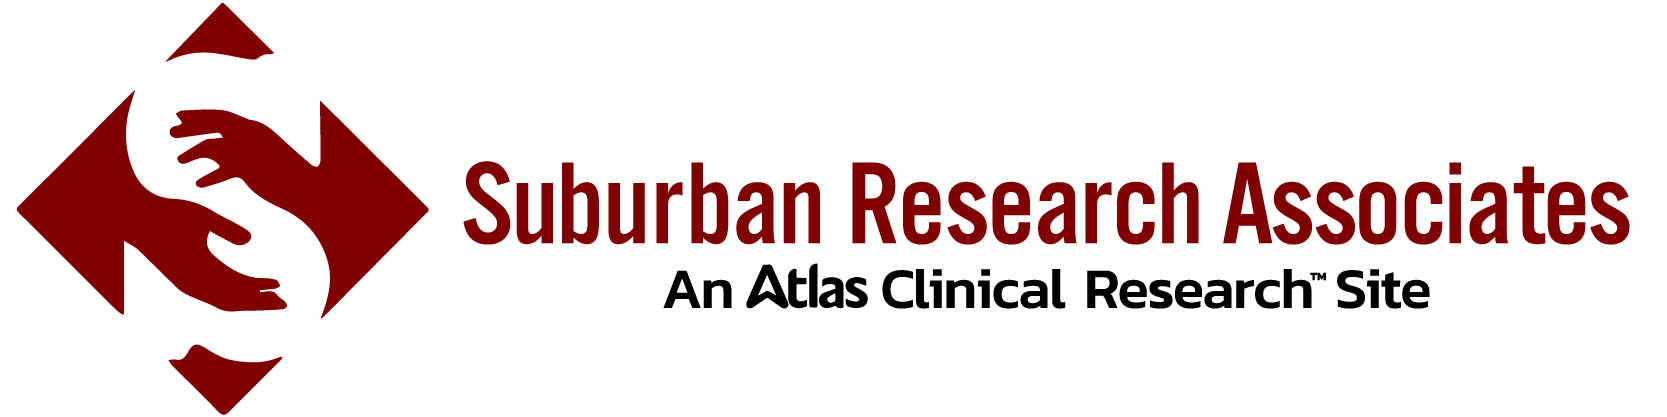 Suburban Research Associates logo